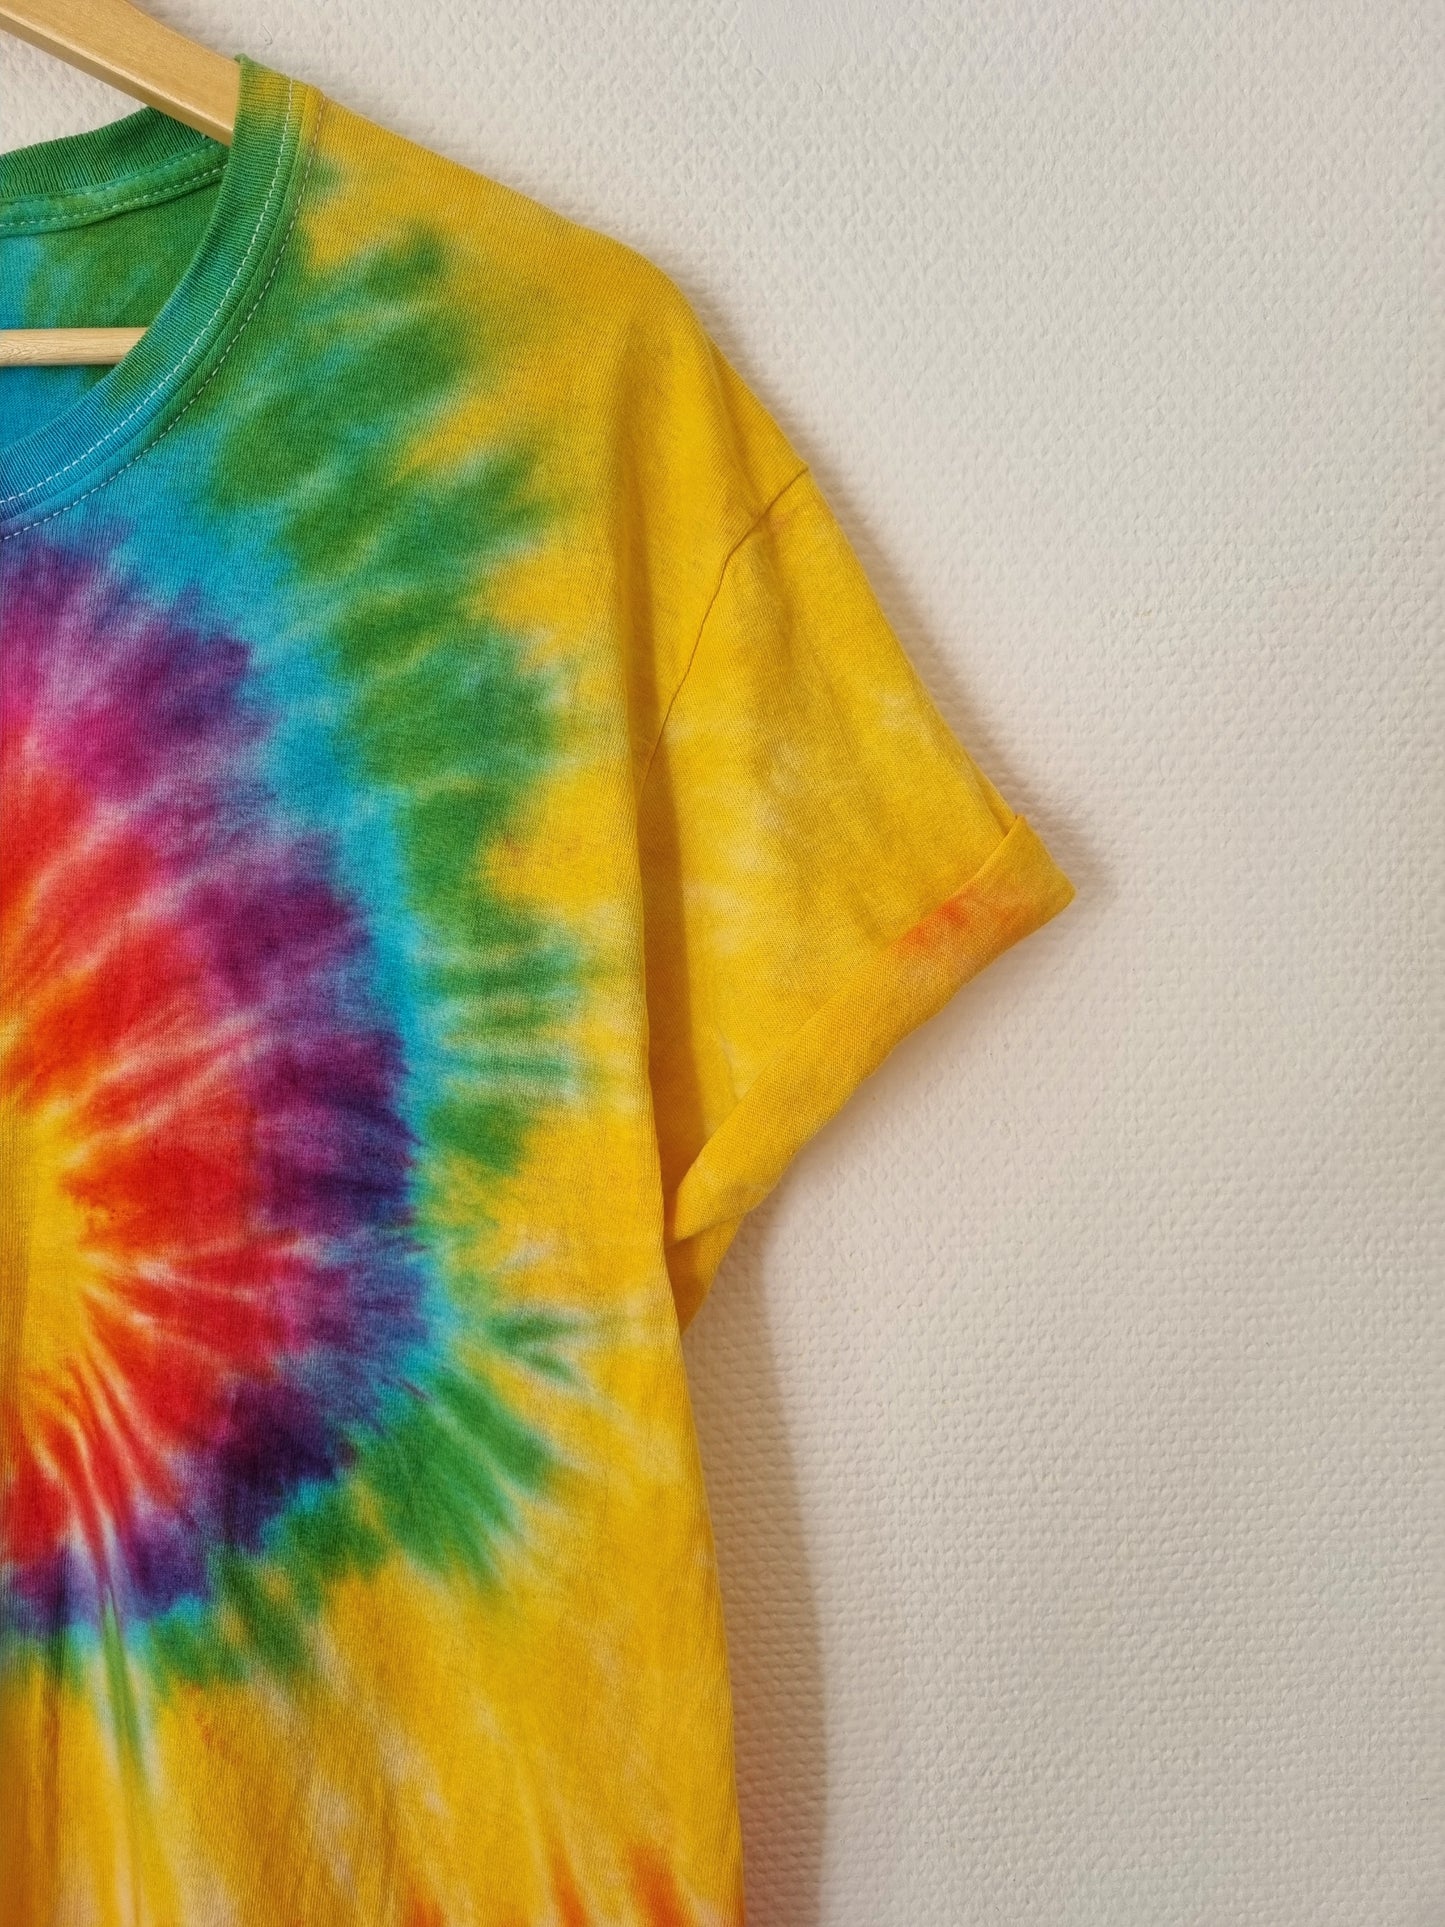 Hand Designed Rainbow Tie-Dye Shirt